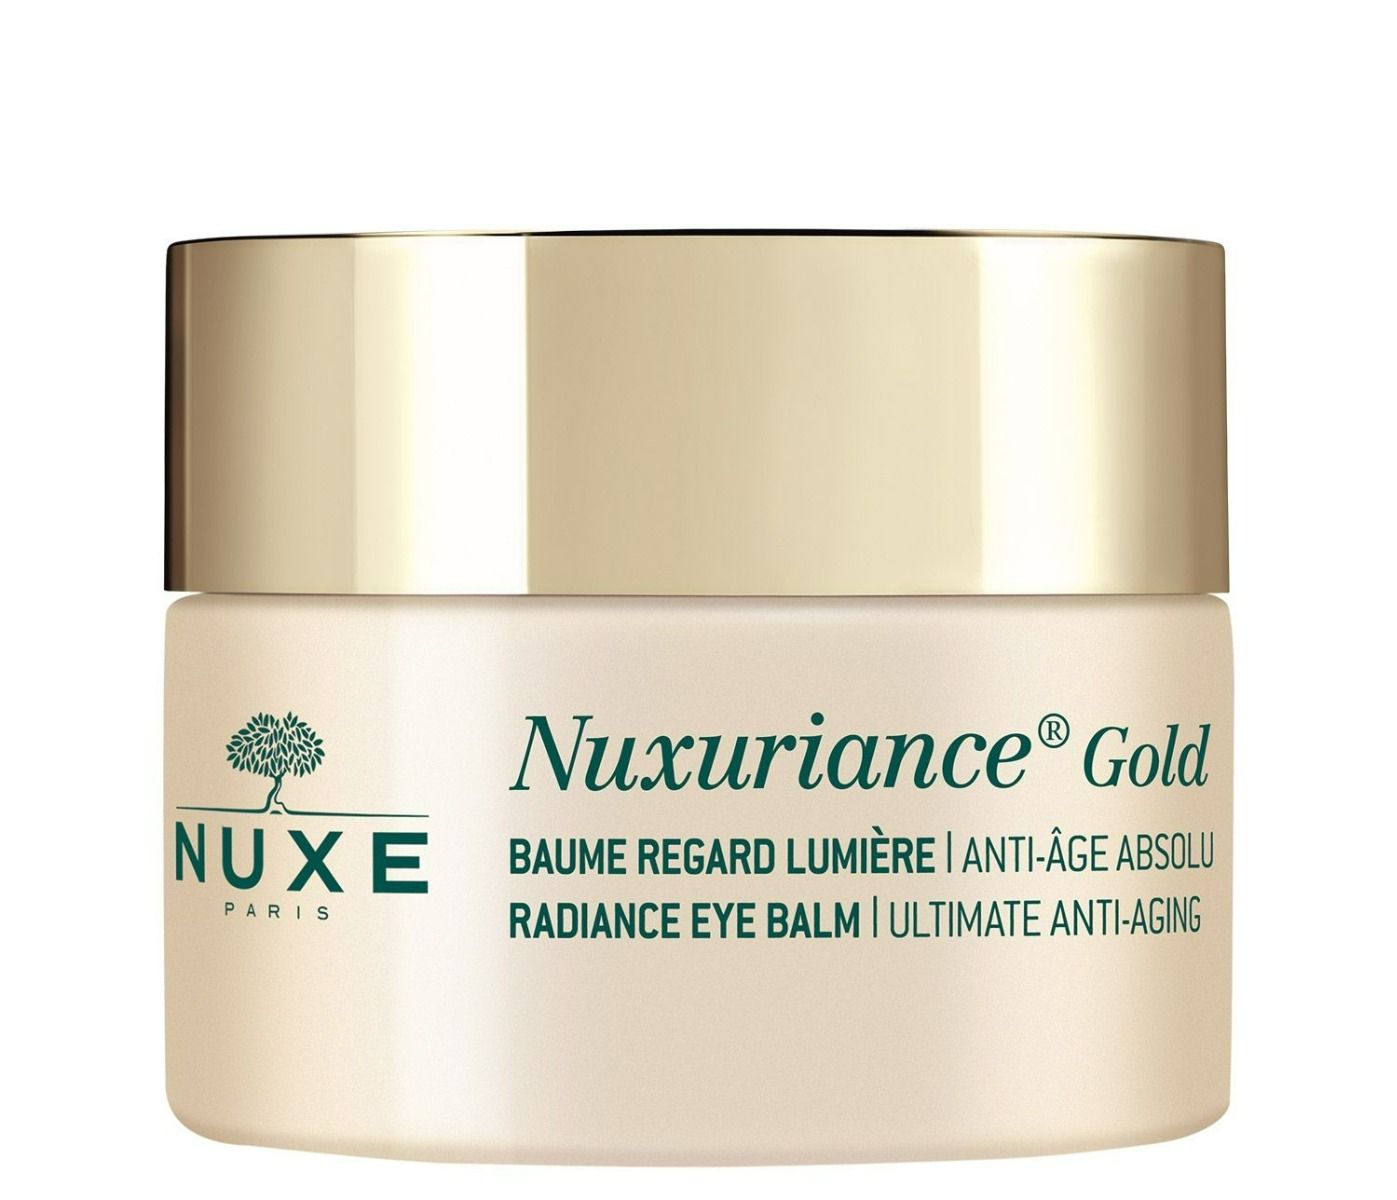 Nuxe Nuxuriance Gold крем для глаз, 15 ml цена и фото